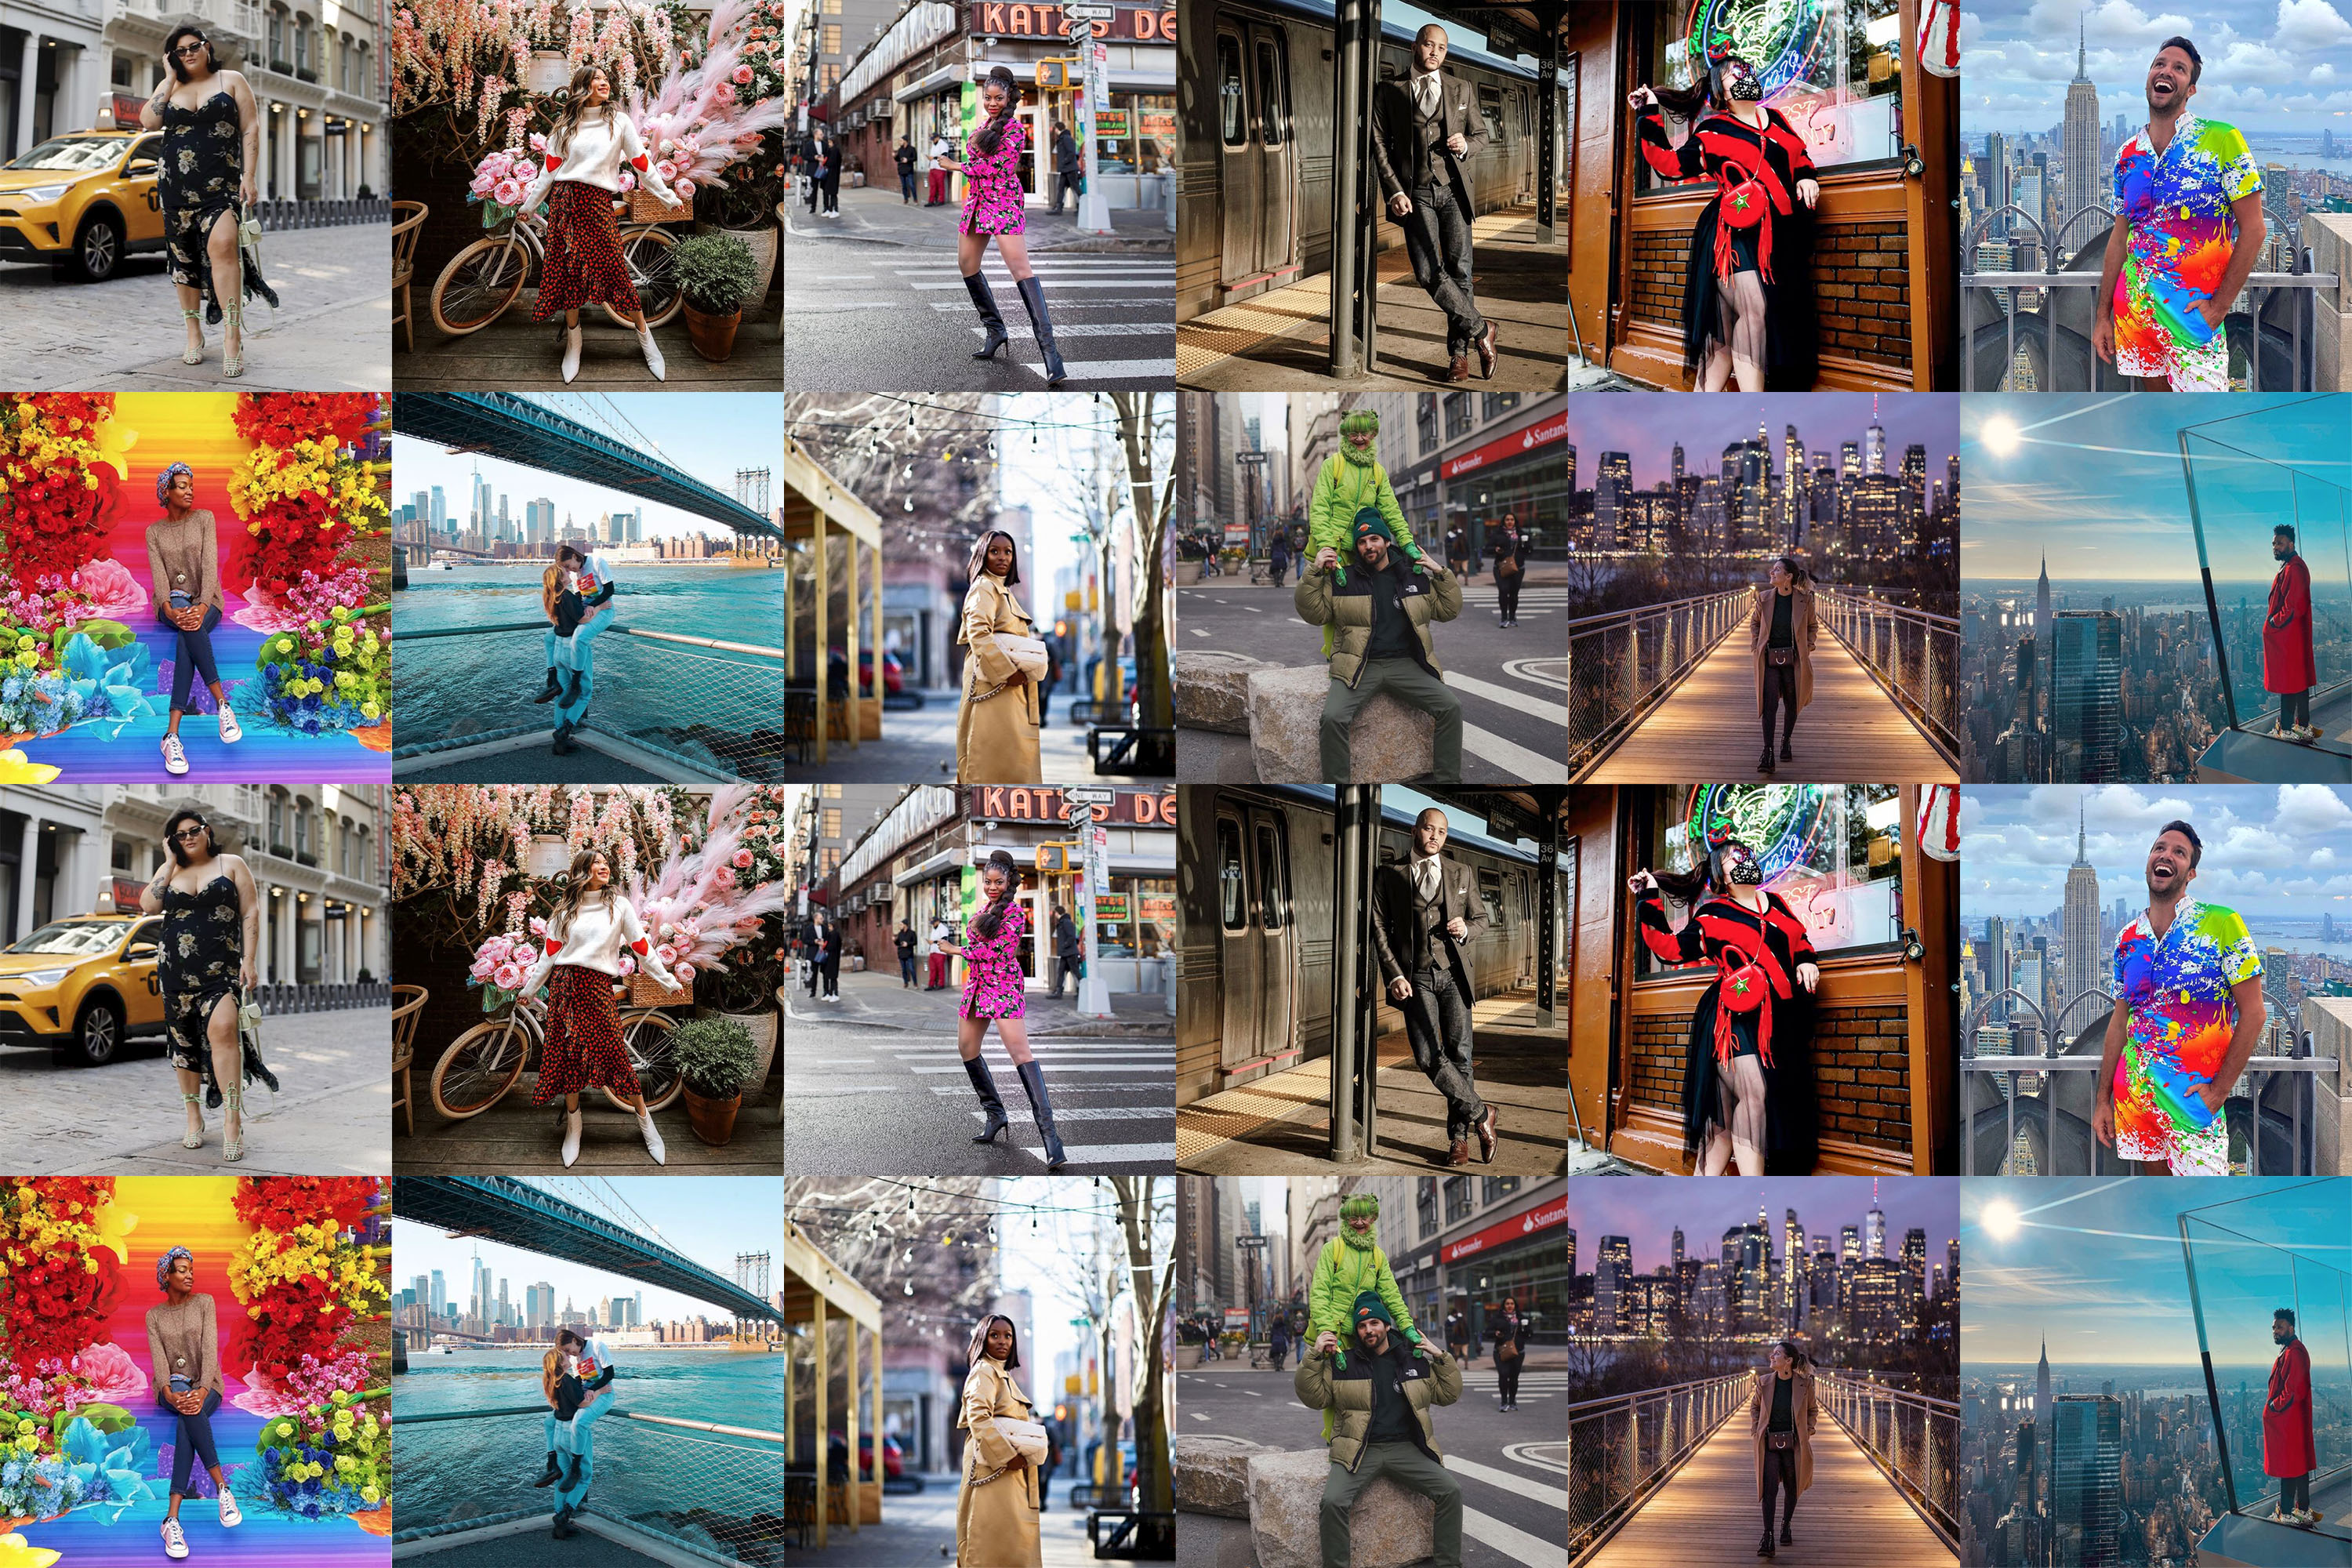 Instagram content creators influencers, new york city, nyc